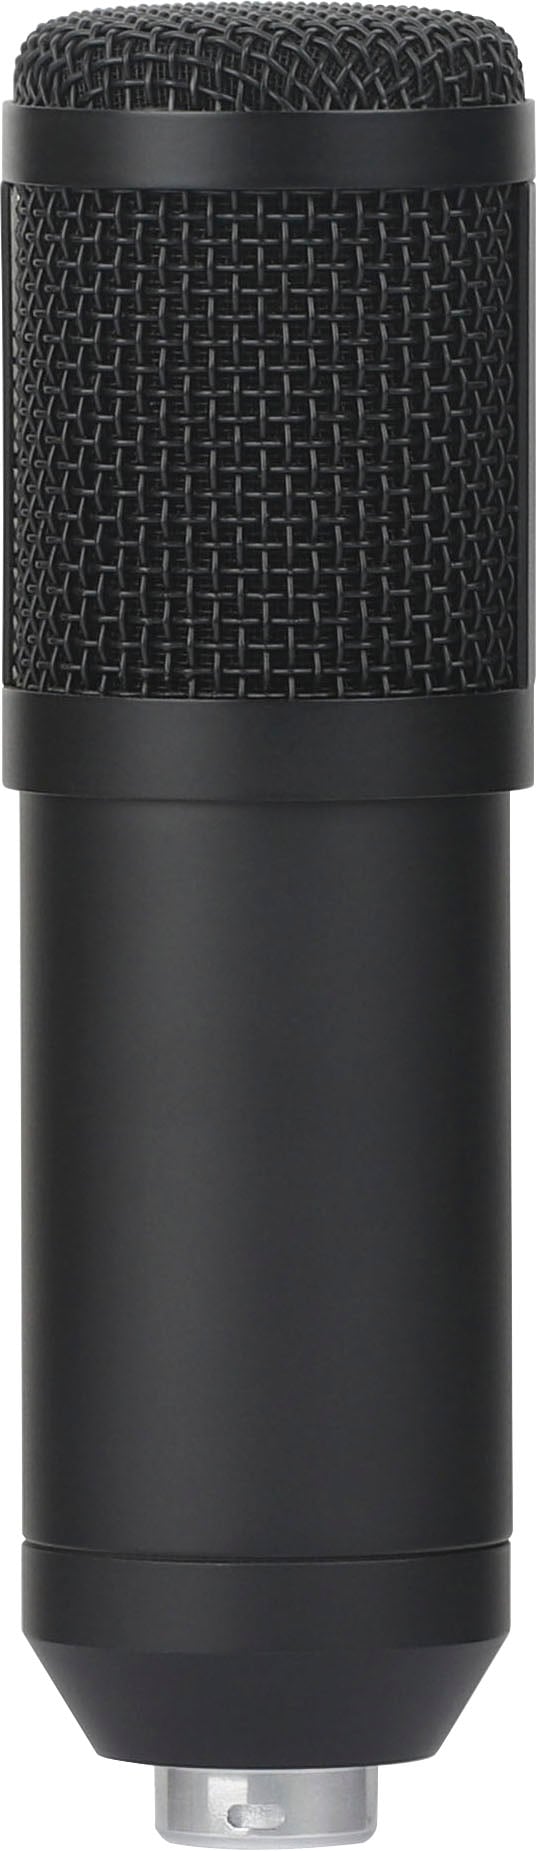 im Mikrofon & Hyrican »USB Mikrofonarm, Online-Shop Popschutz« Set ST-SM50 mit Streaming Spinne bestellen Mikrofon